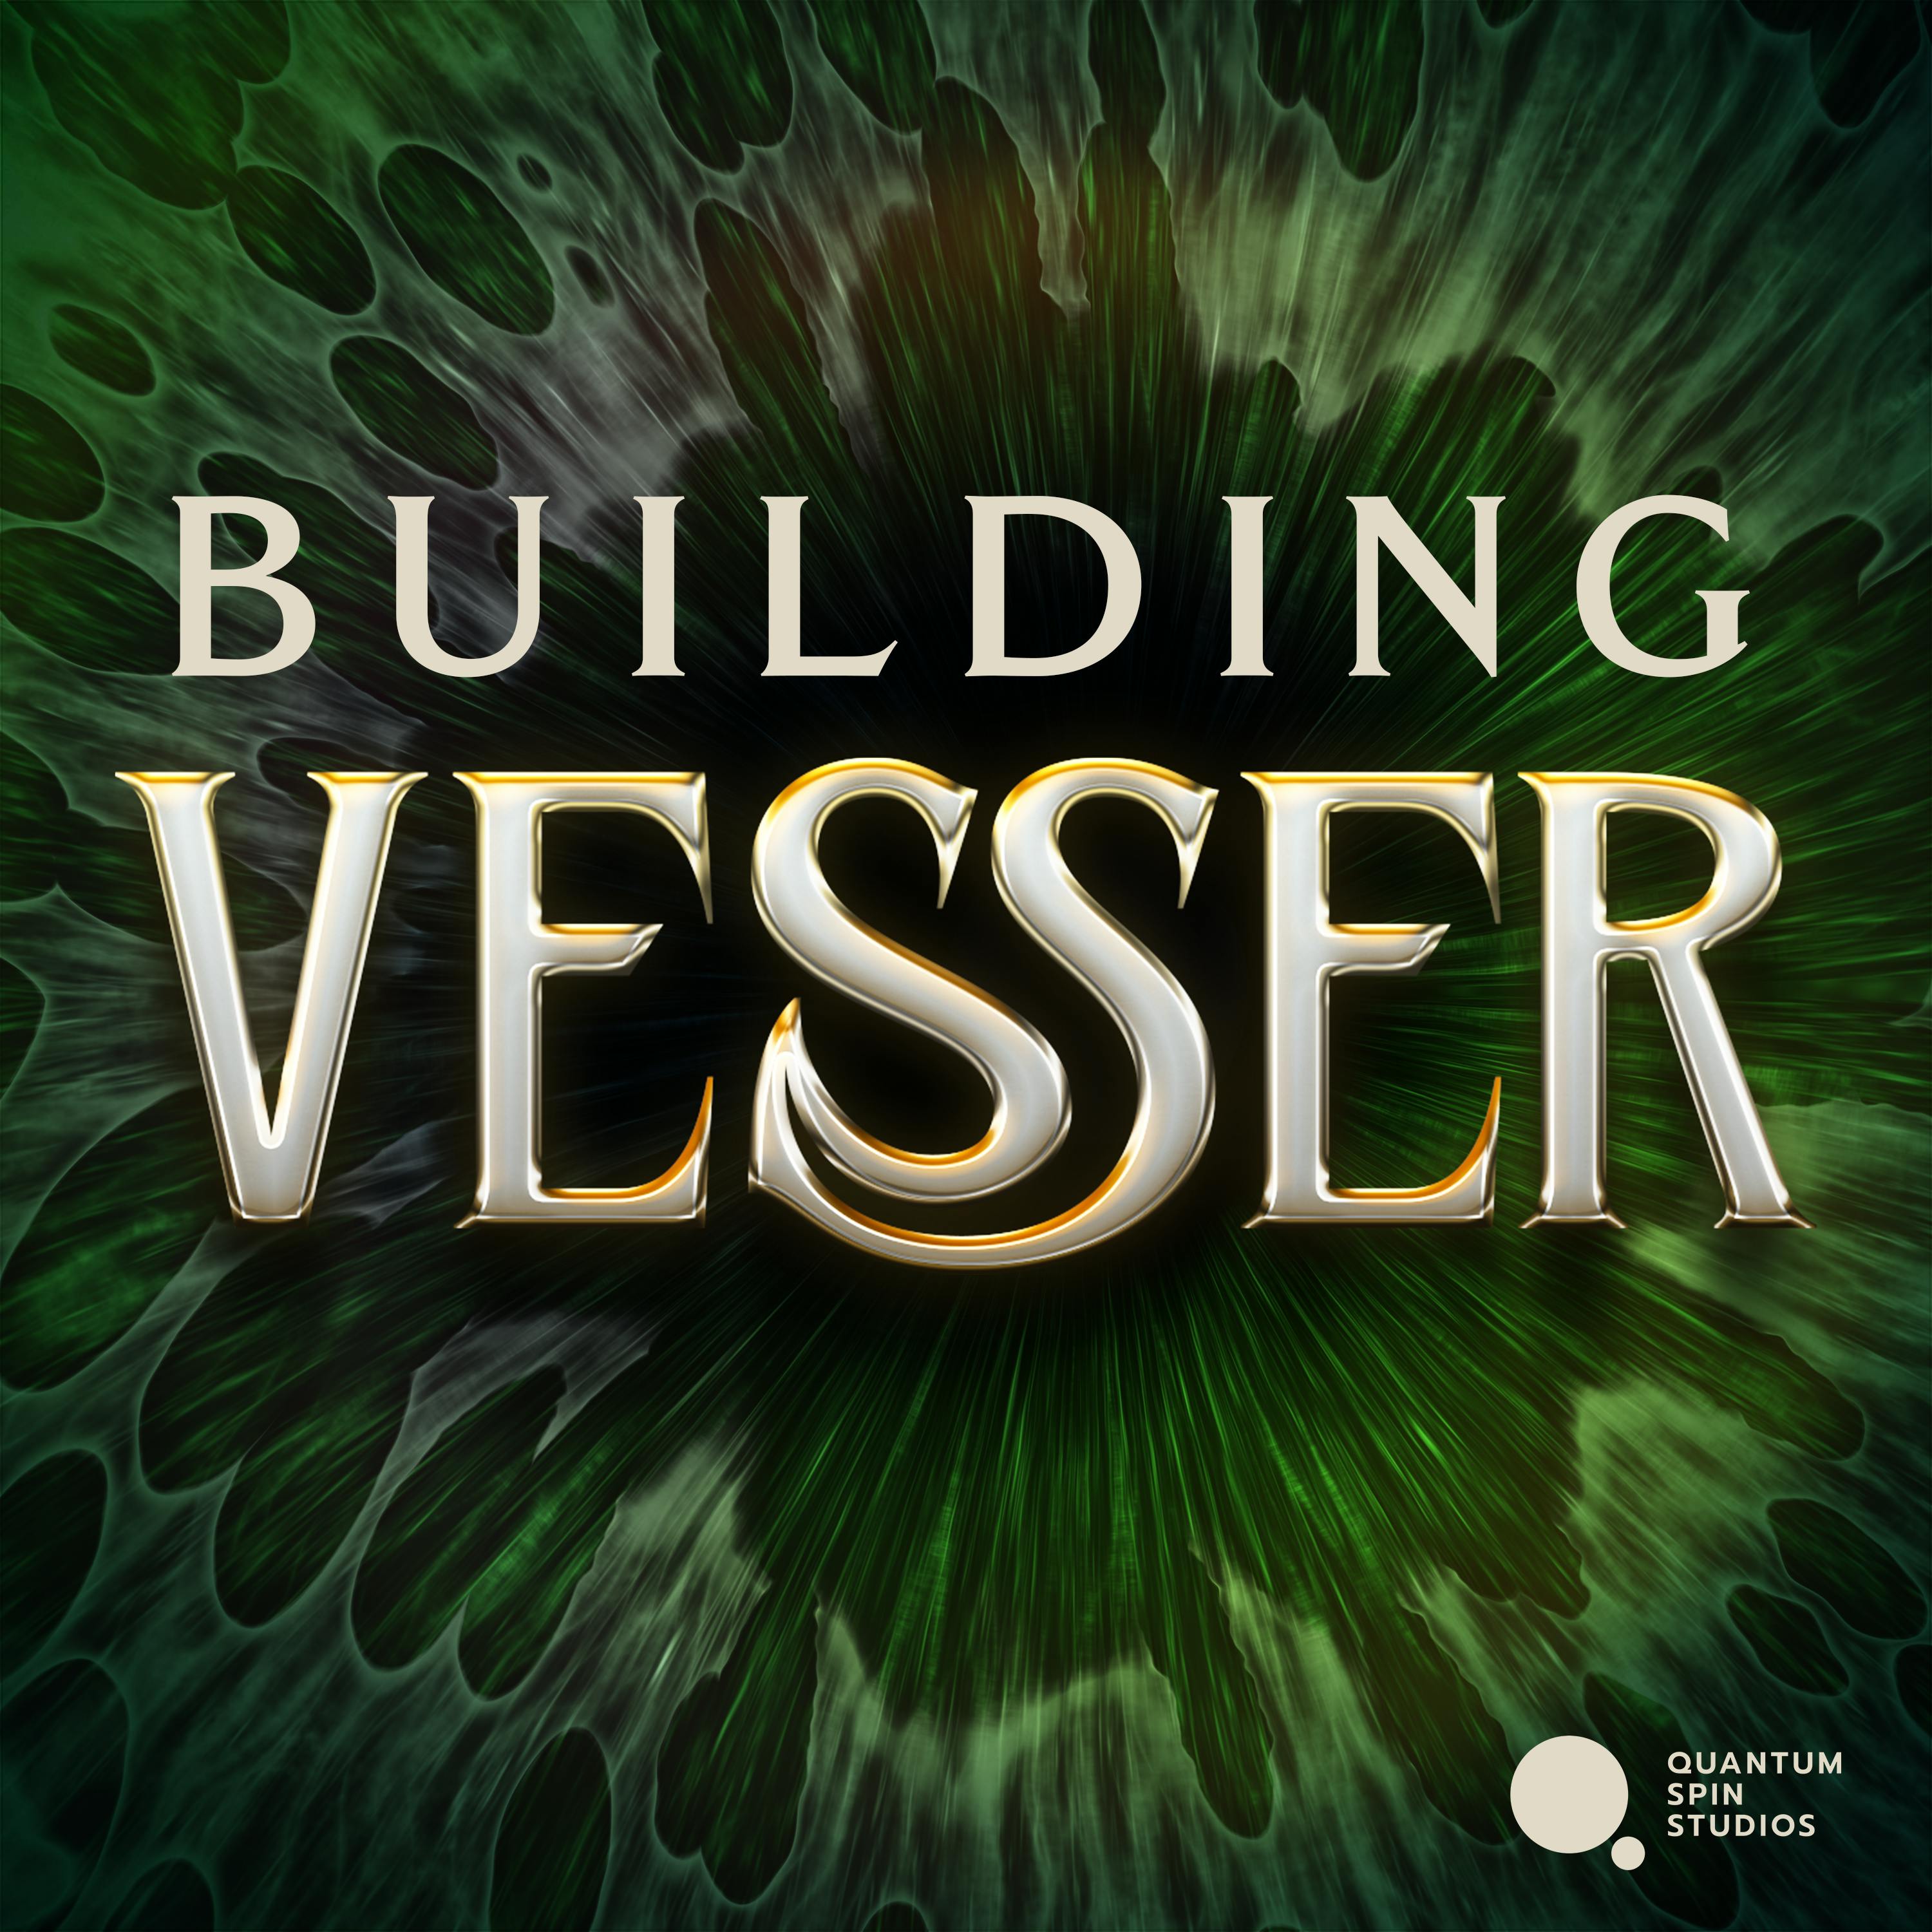 Building Vesser: Mike’s Back! A Holiday Episode